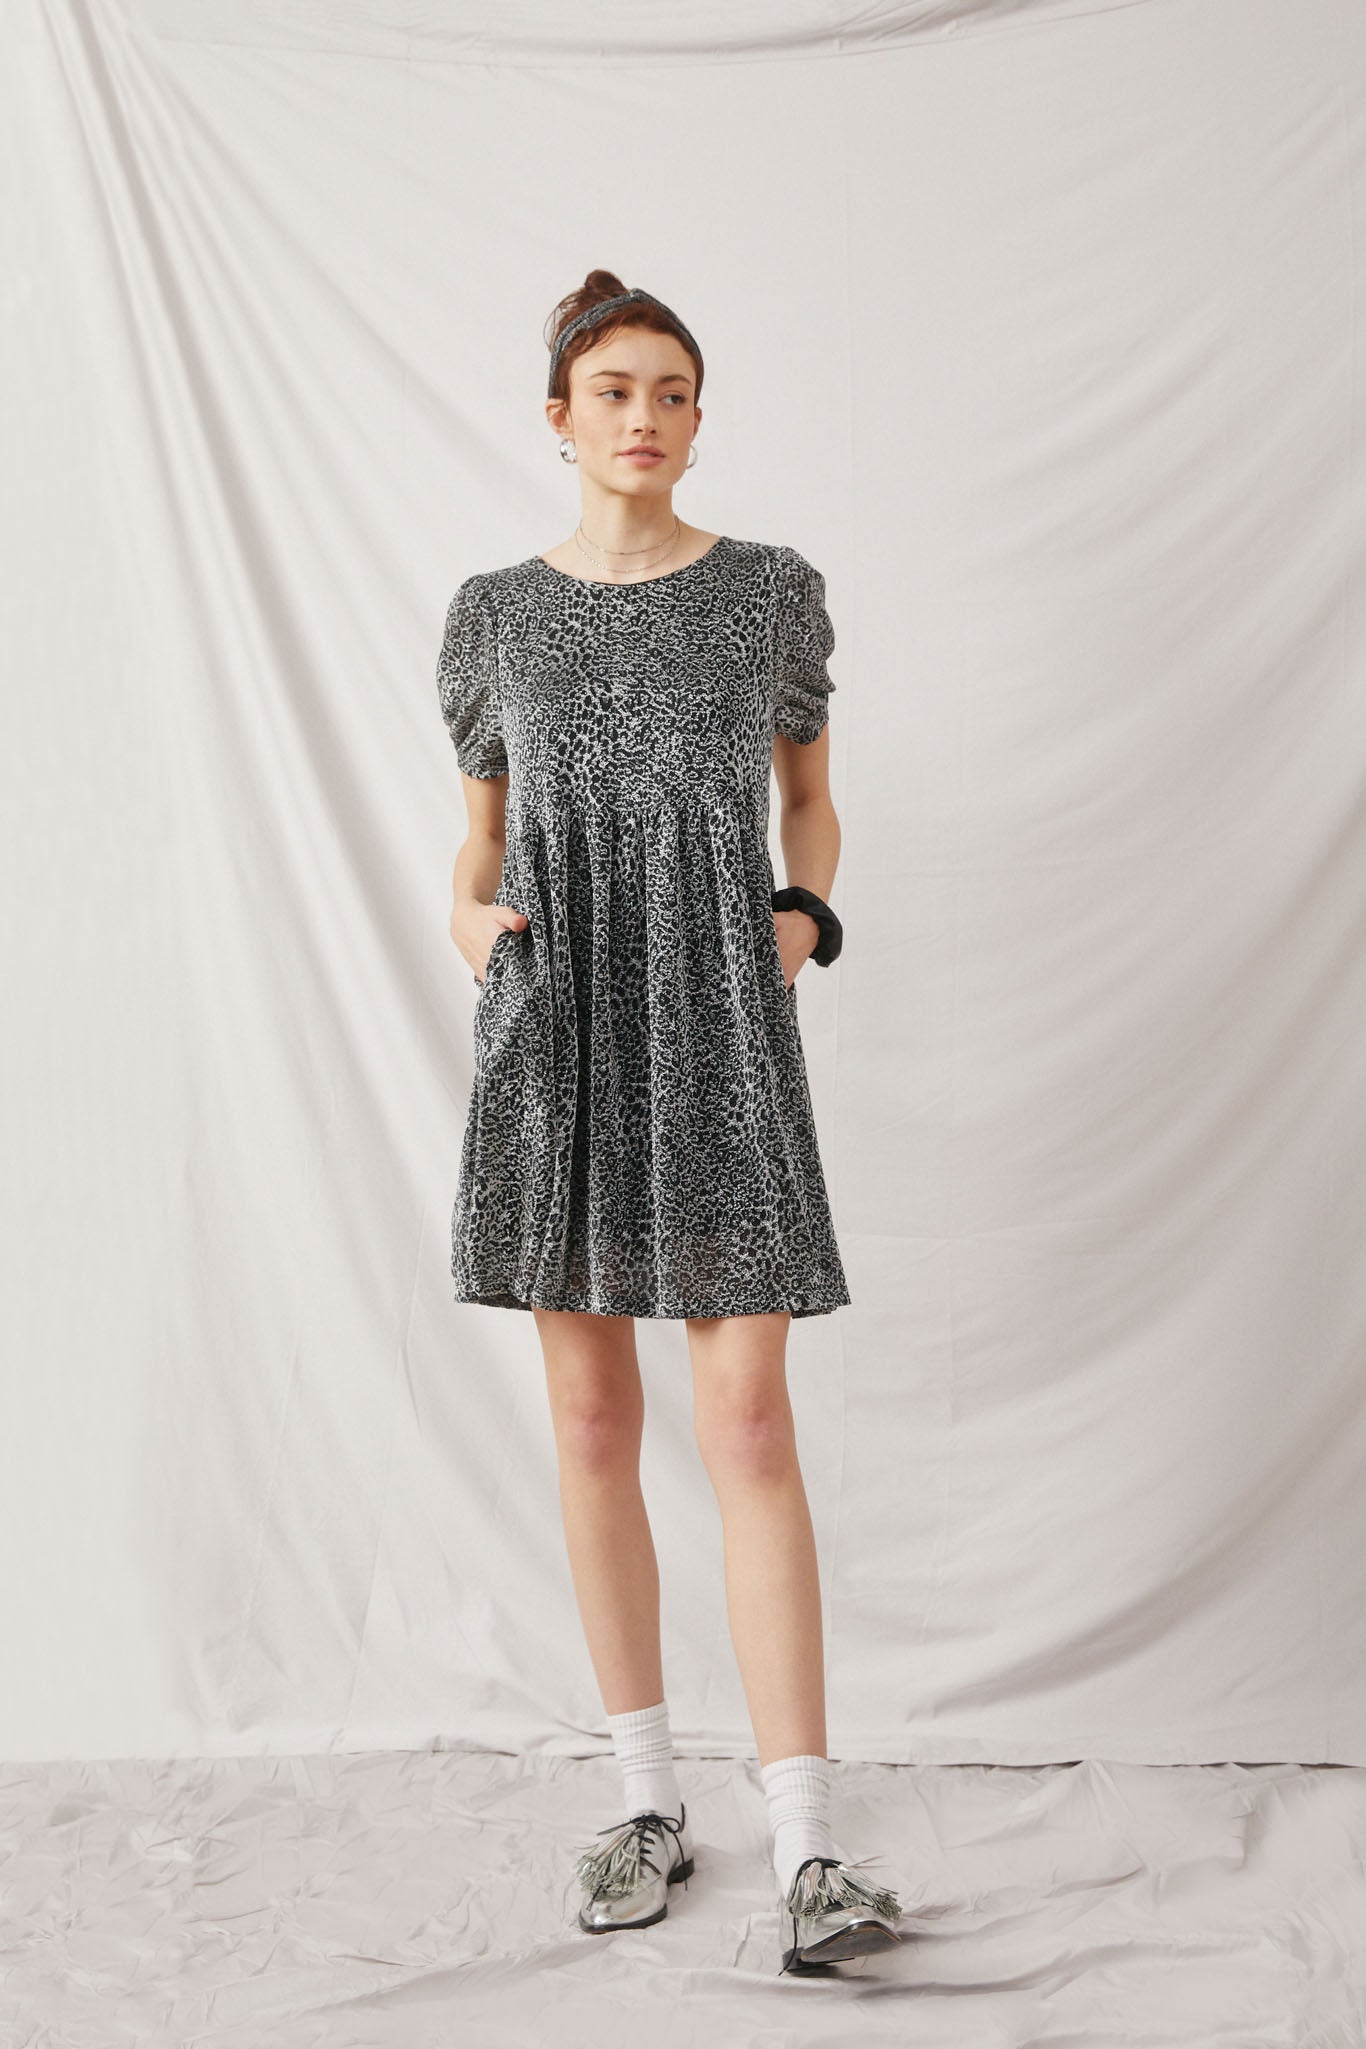 HY5467 Silver Womens Metallic Animal Print Knit Dress Full Body